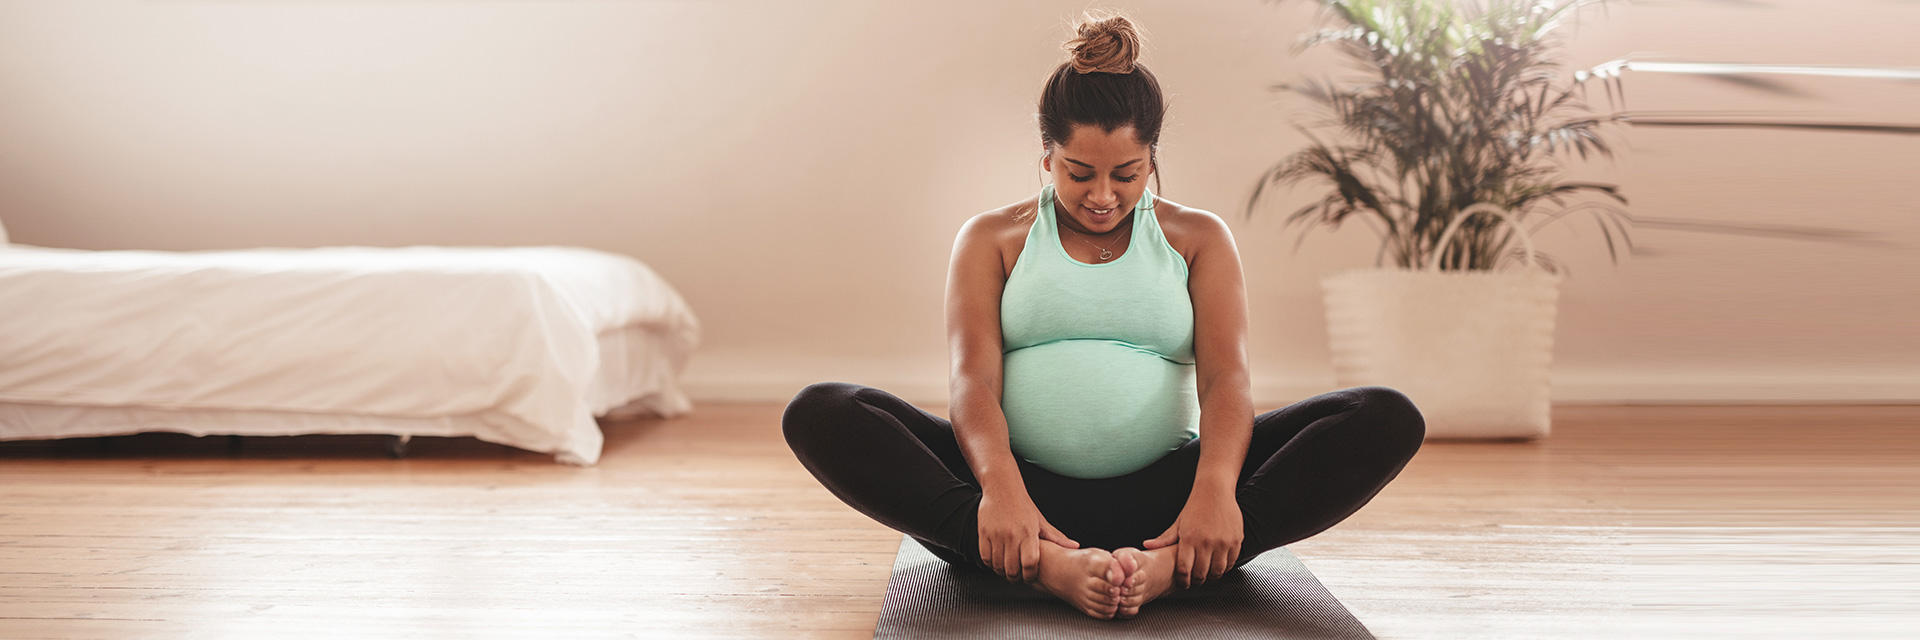 Pregnant Woman doing Yoga Stretch